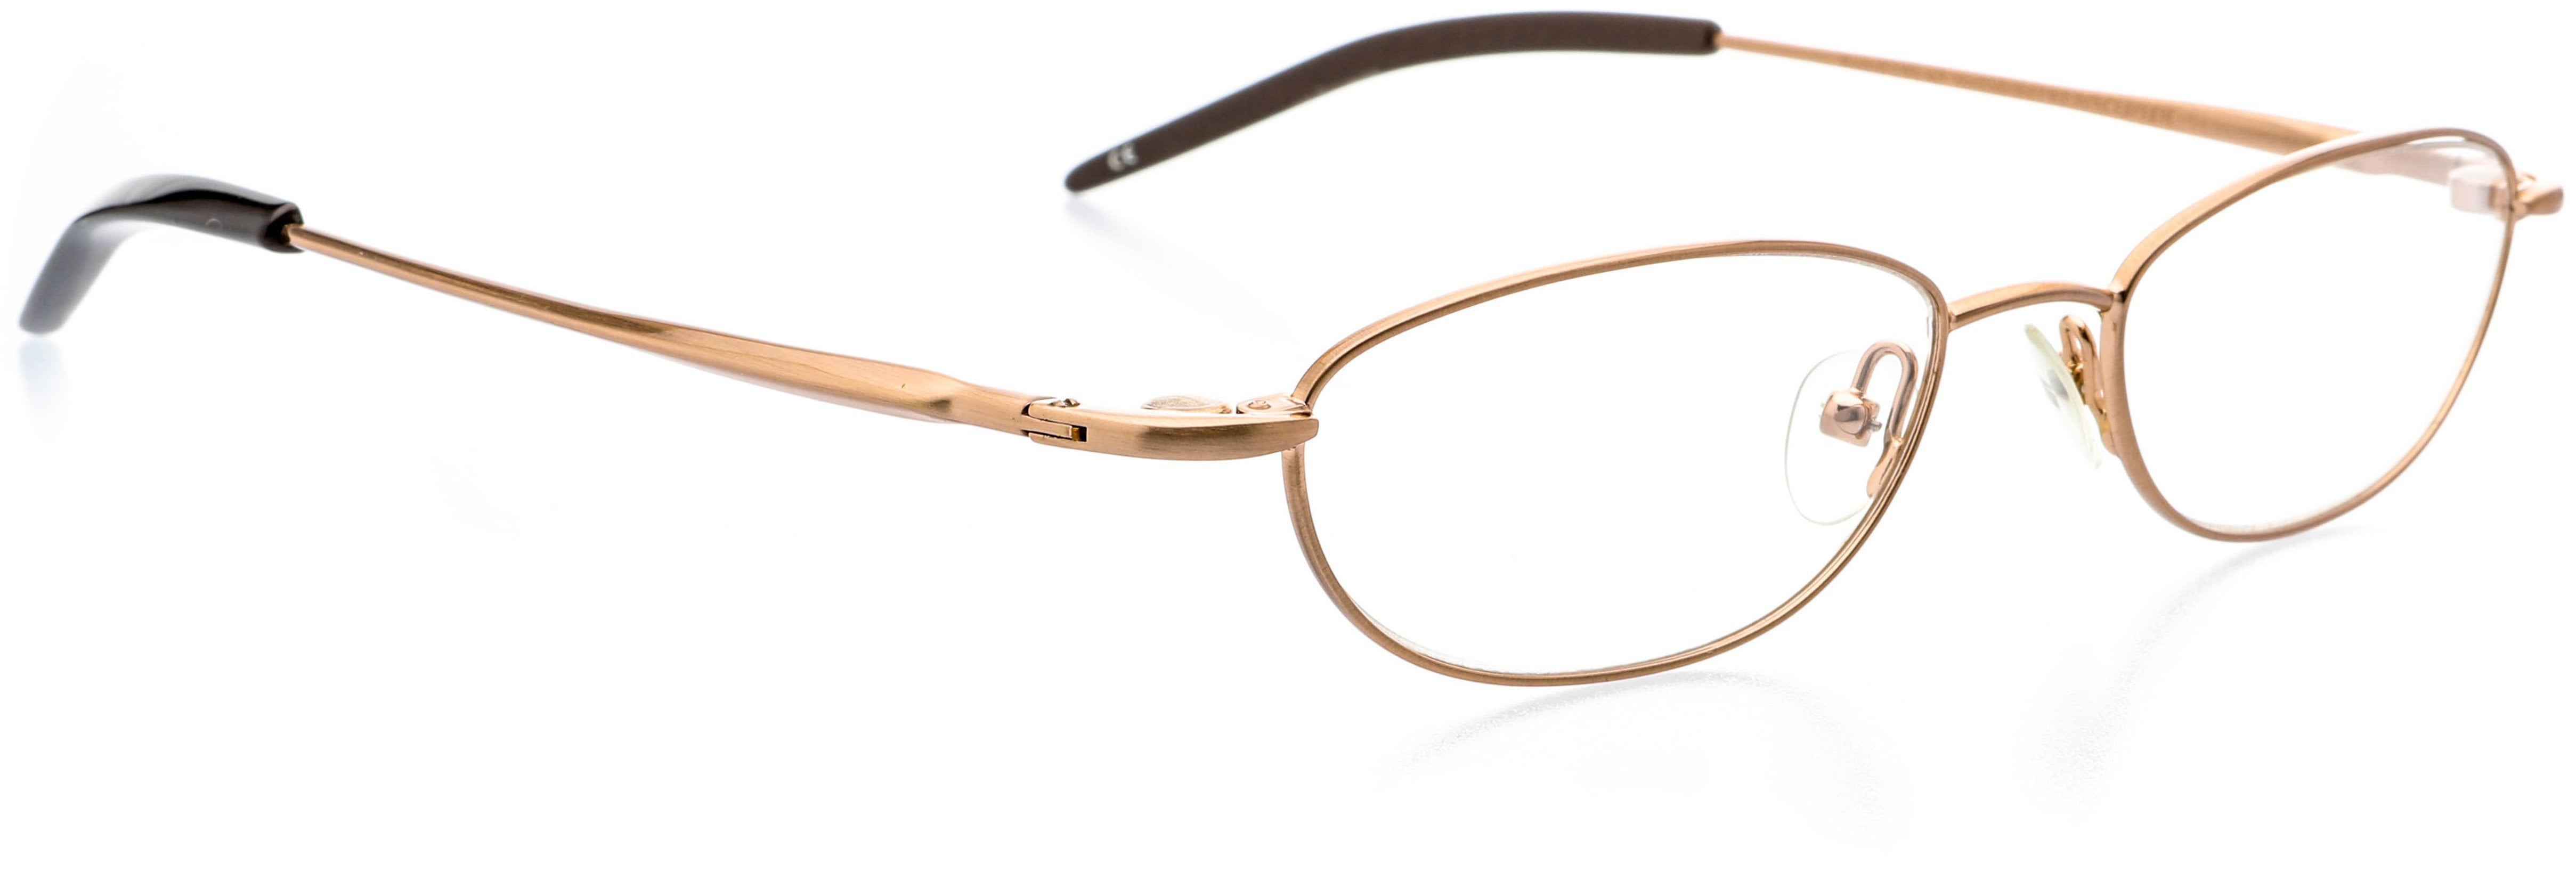 Optical Eyewear Oval Shape Metal Full Rim Frame Prescription Eyeglasses Rx Copper 